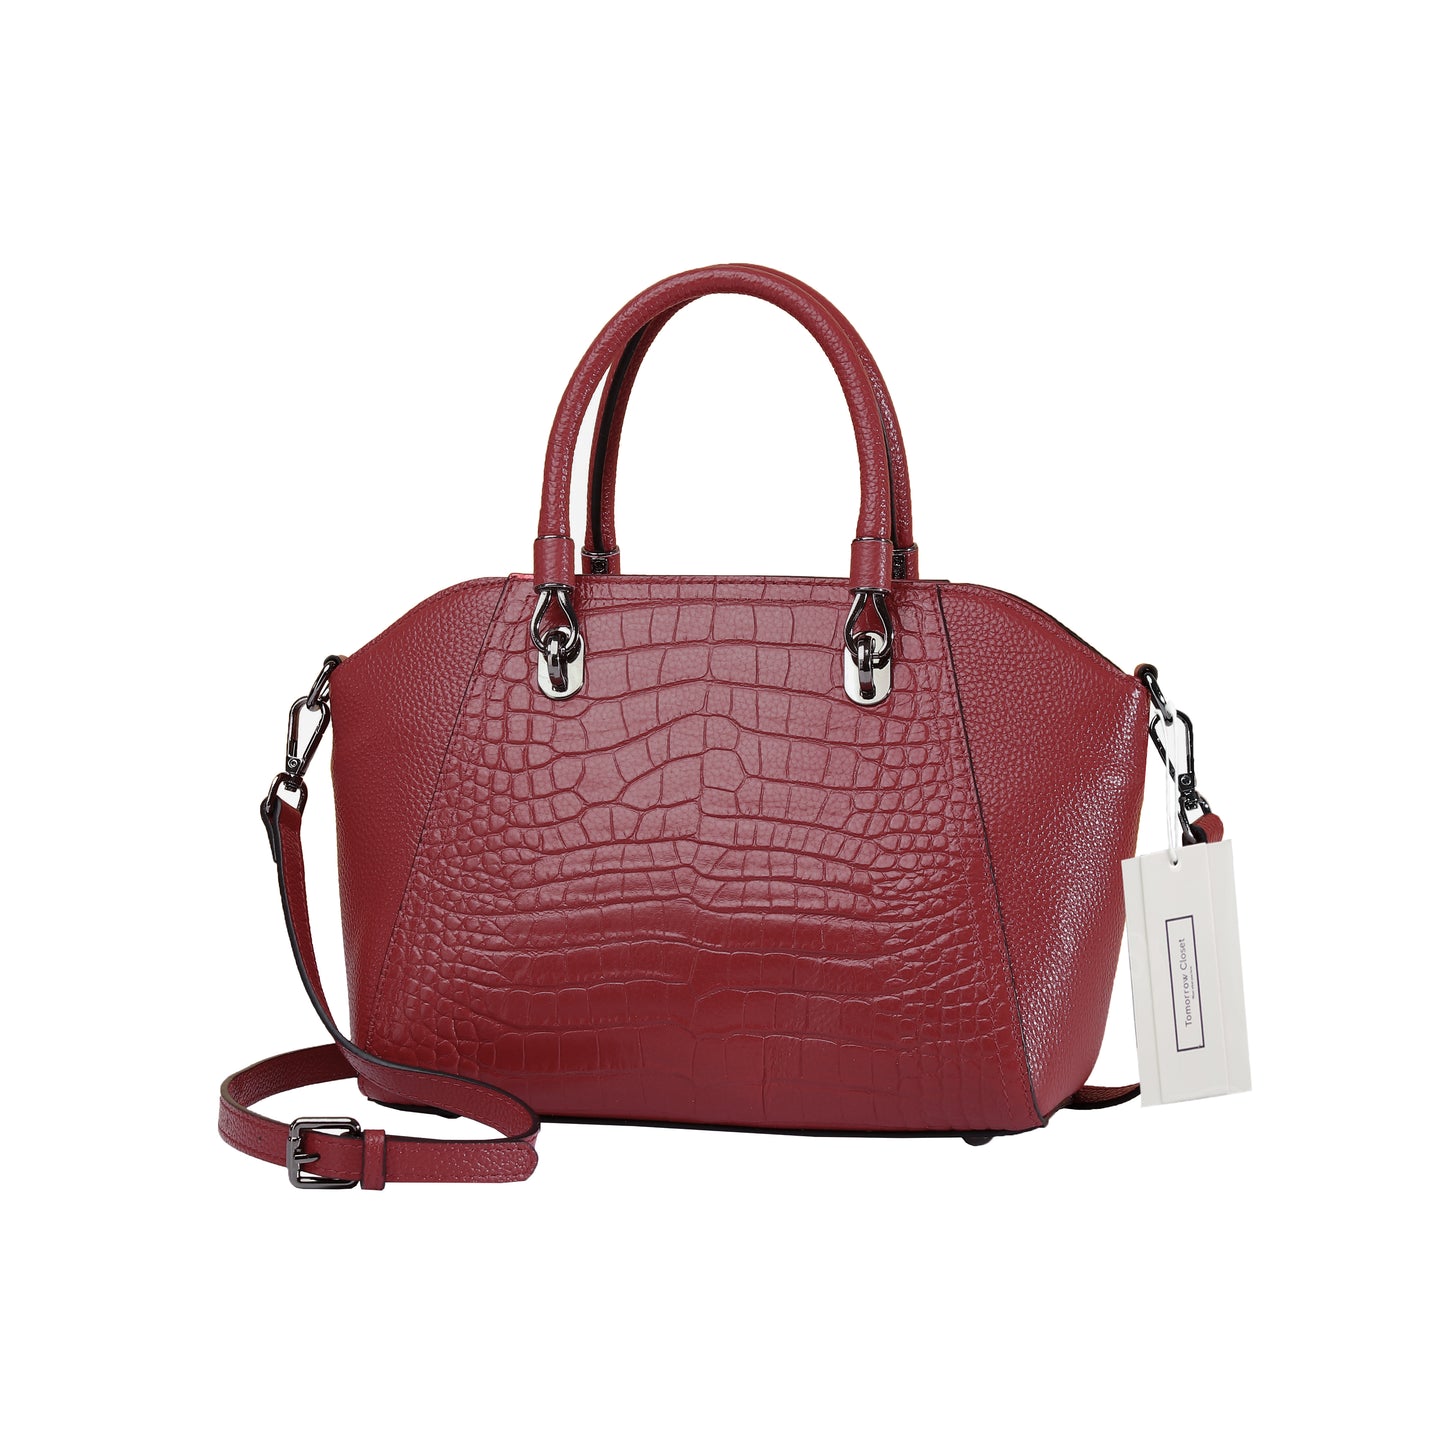 Women's genuine cowhide leather handbag Ellipse design in crocodile print